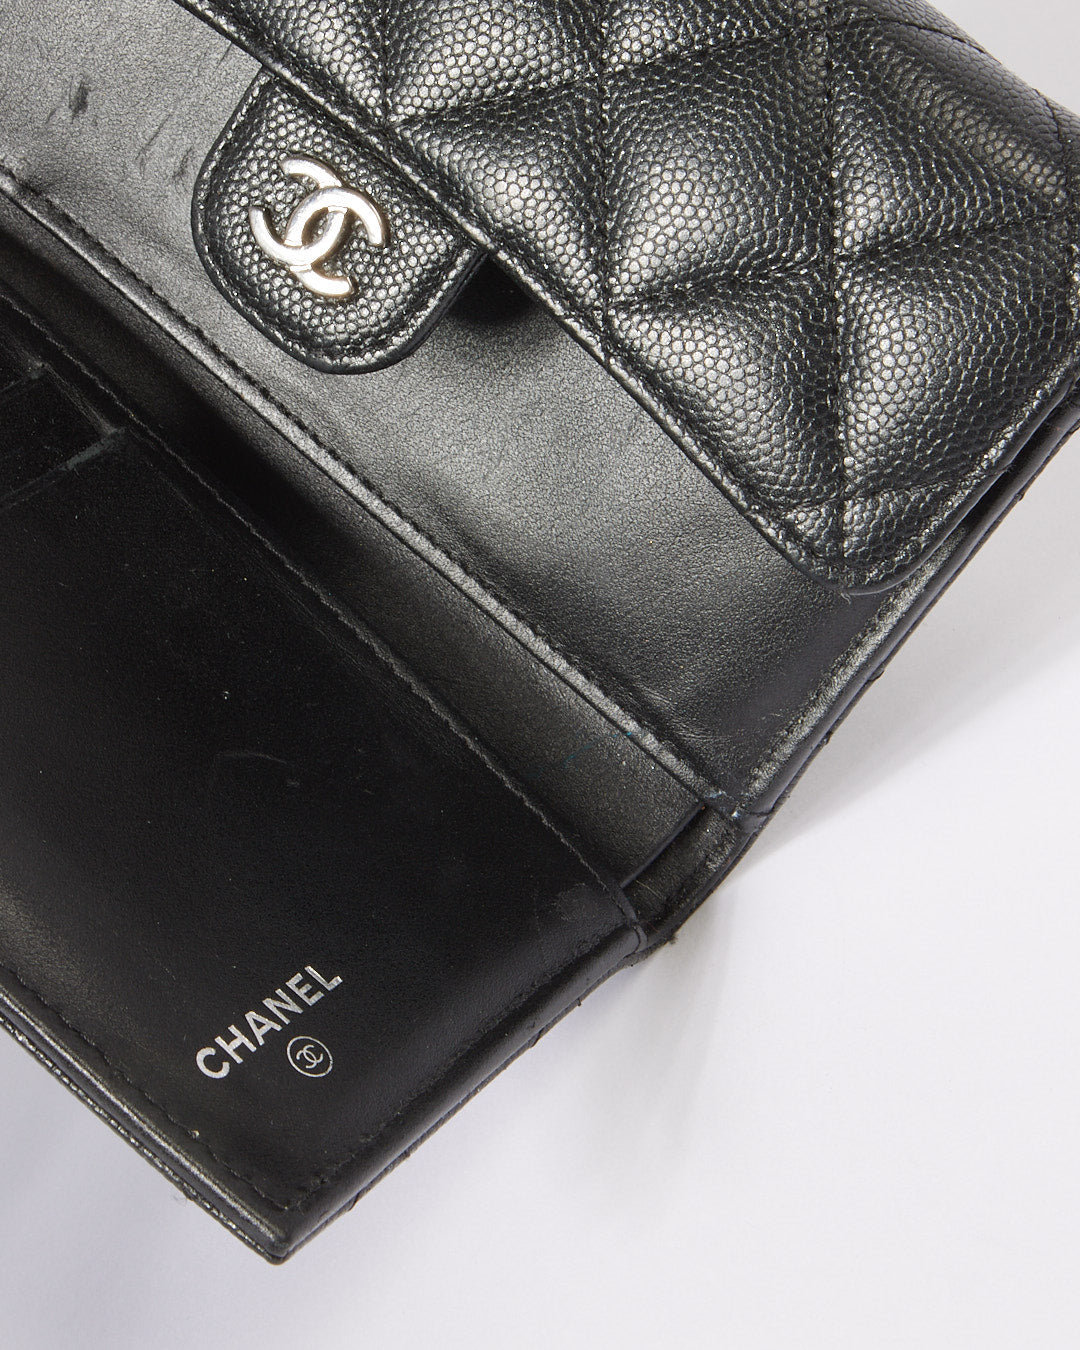 Chanel Black Caviar Leather Interlocking CC Logo Compact Wallet